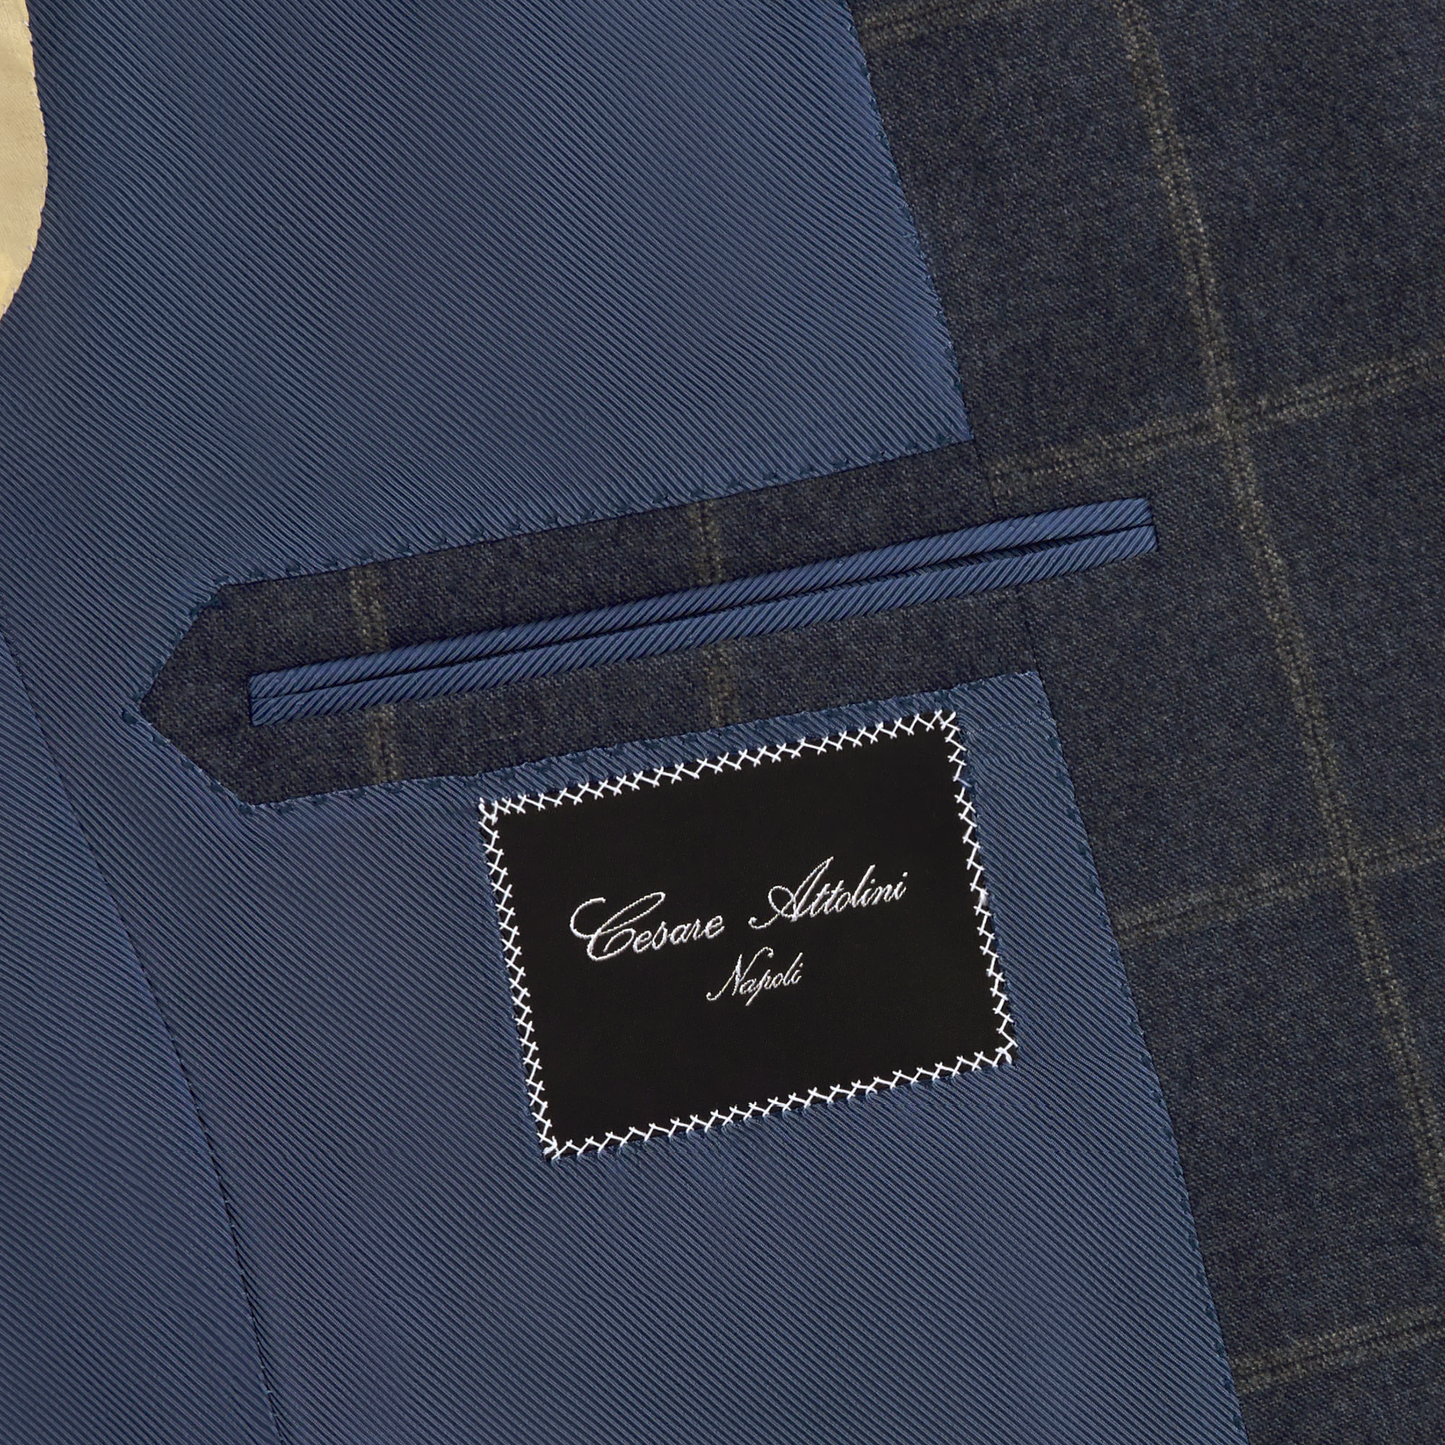 Cesare Attolini Single-Breasted Windowpane Wool and Silk-Blend Suit in Dark Blue - SARTALE